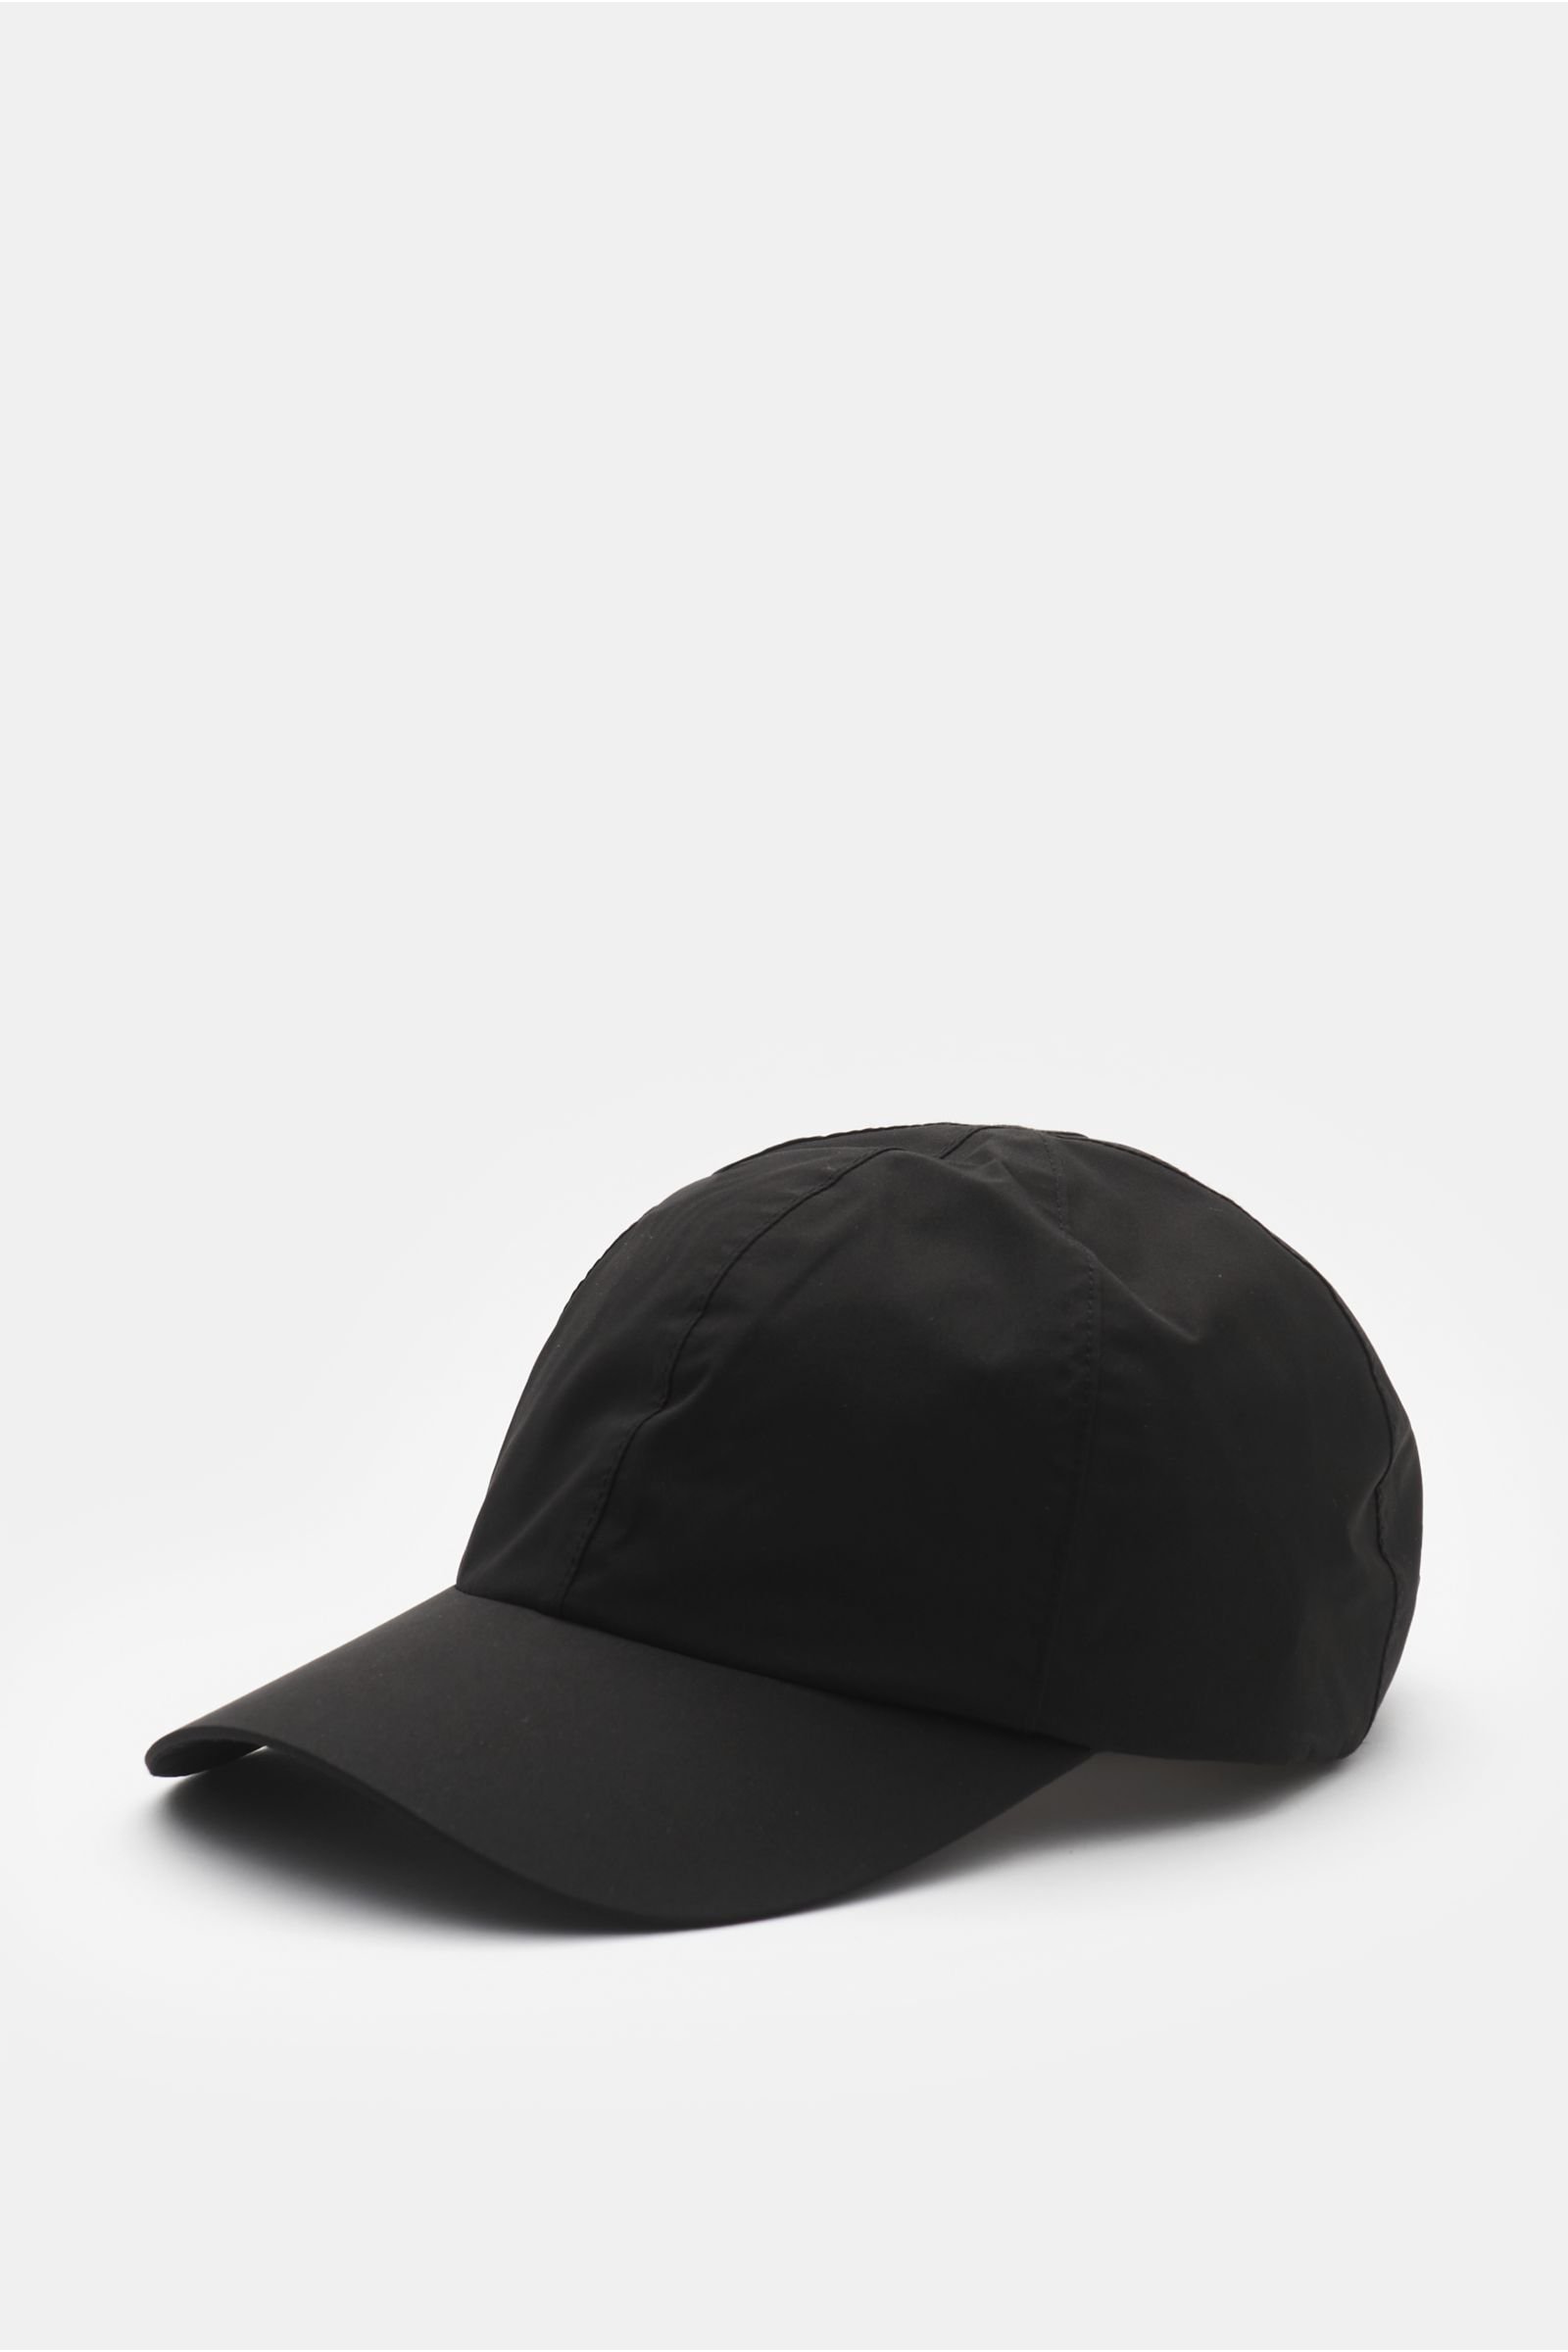 Base cap black